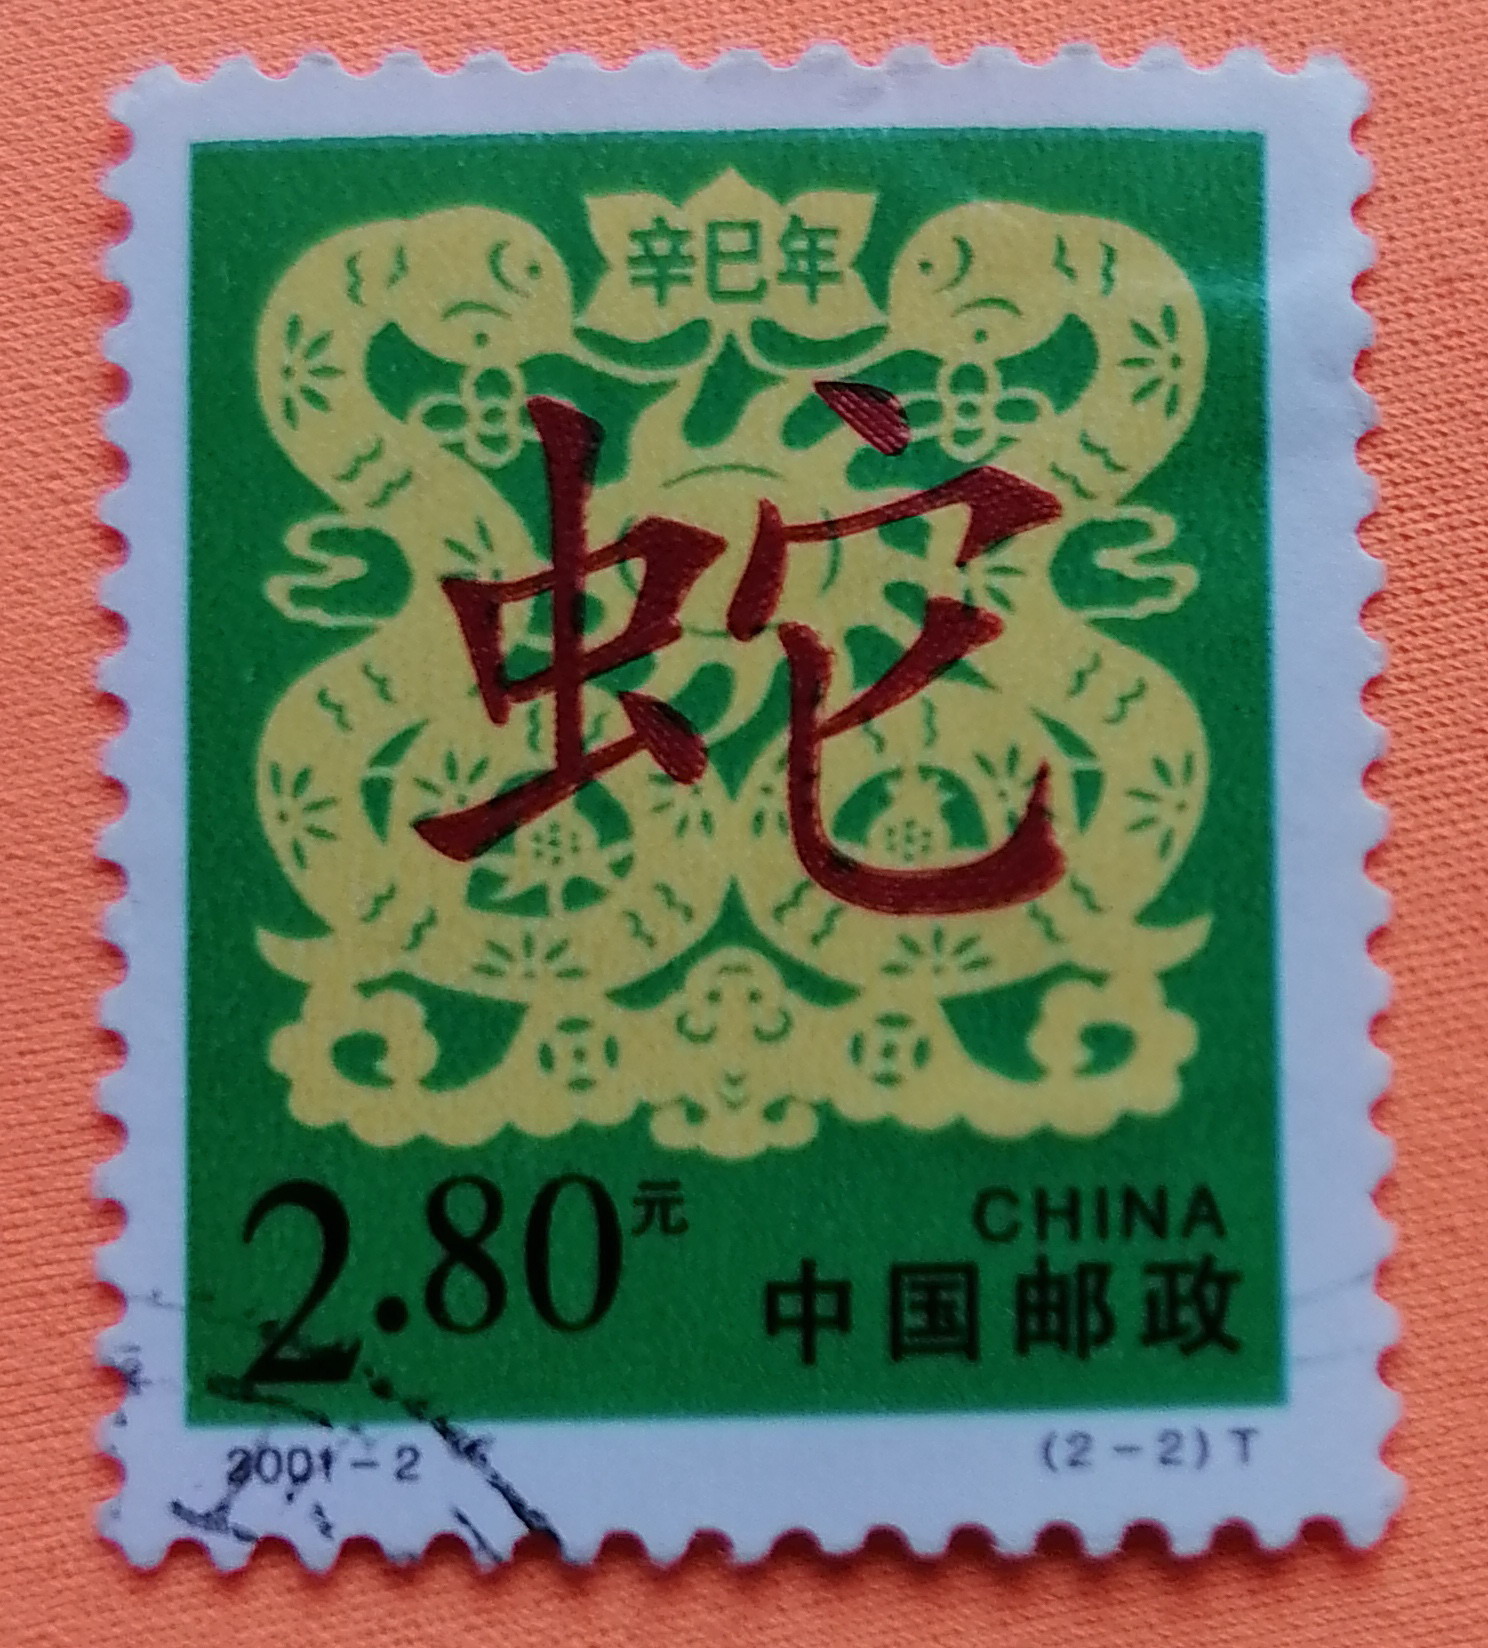 2001-2 Zodiac Snake (2-2) Letter pin stamp Near upper physical figure-Taobao